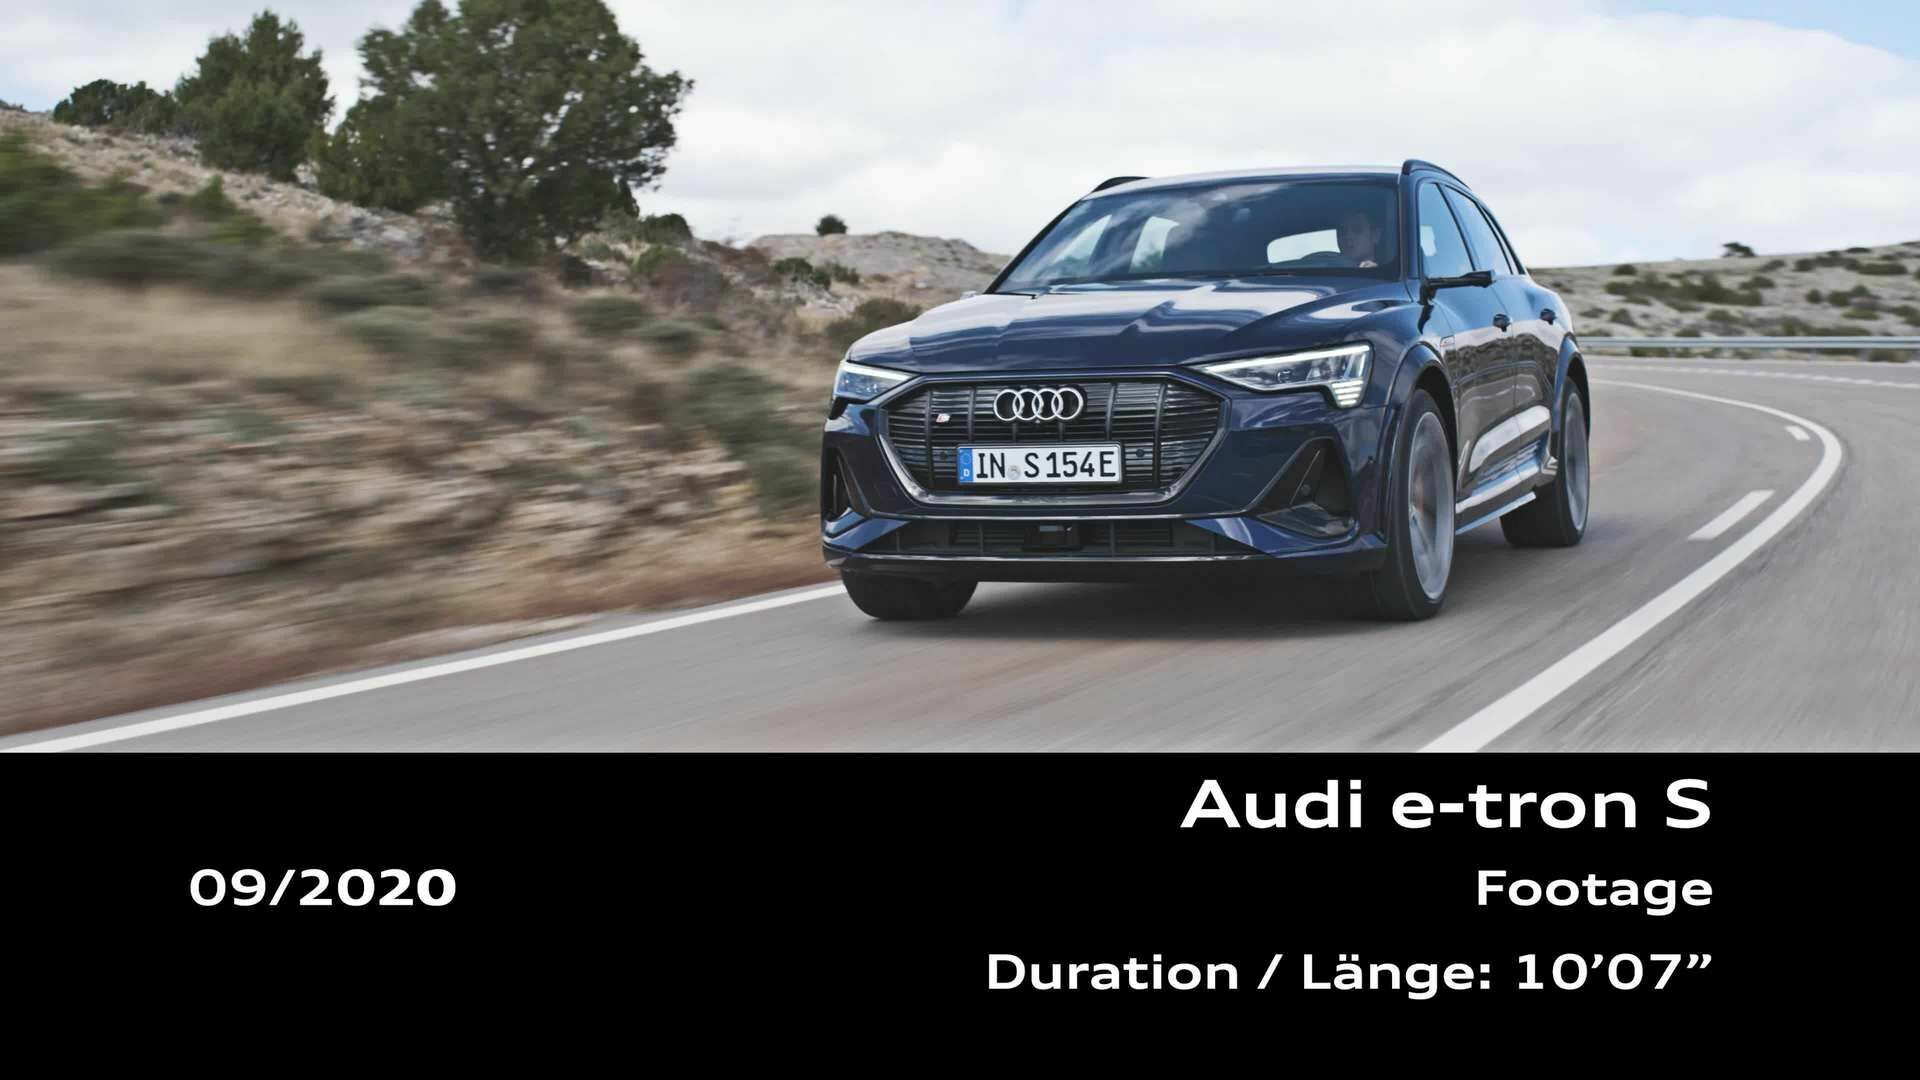 Footage: Audi e-tron S